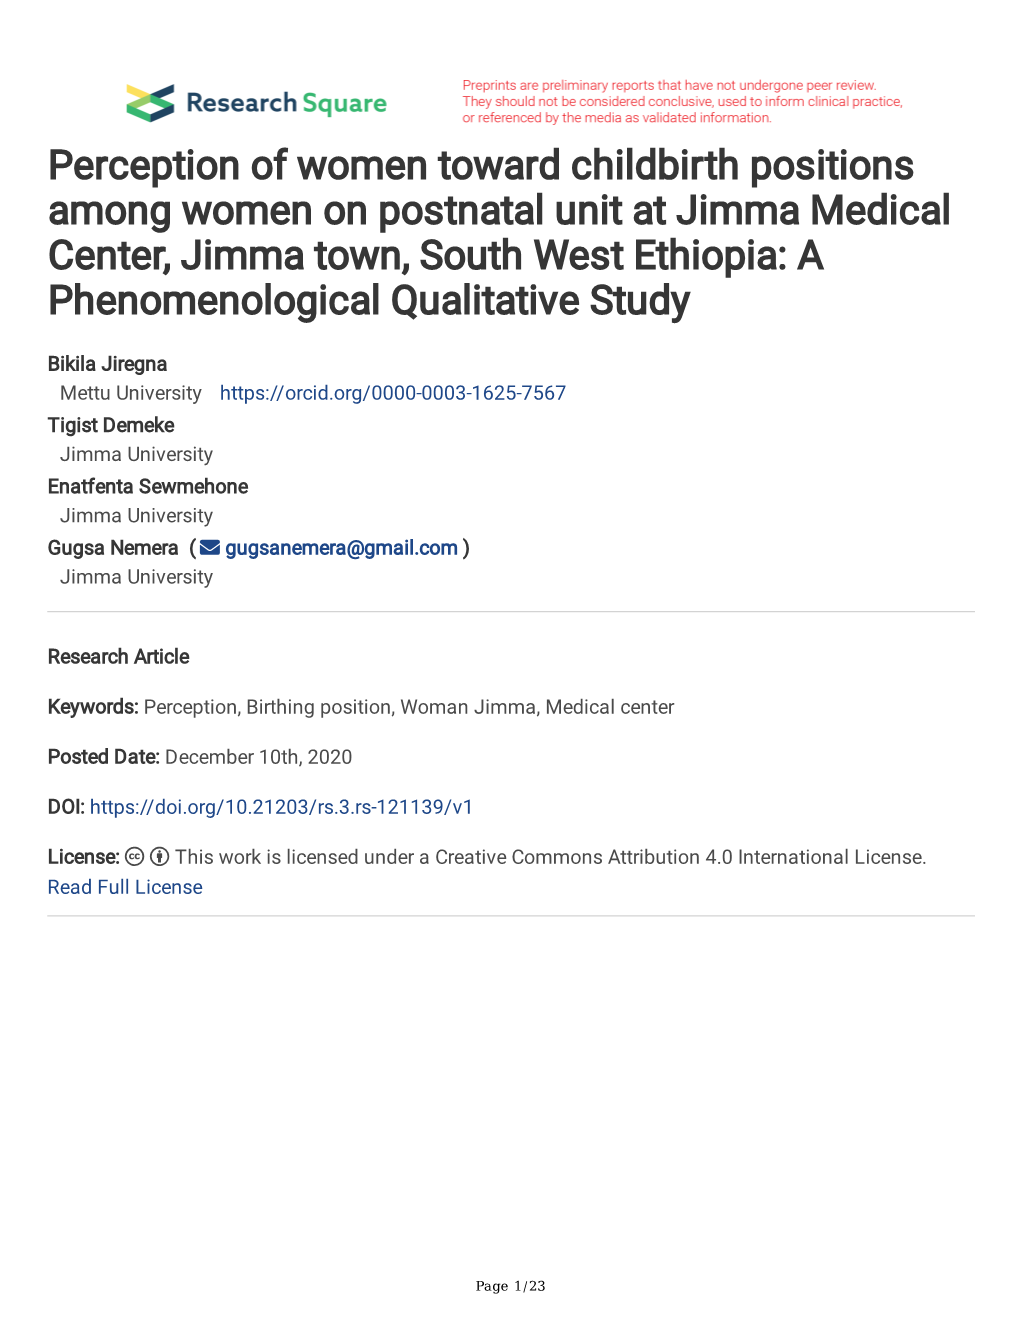 Perception of Women Toward Childbirth Positions Among Women On